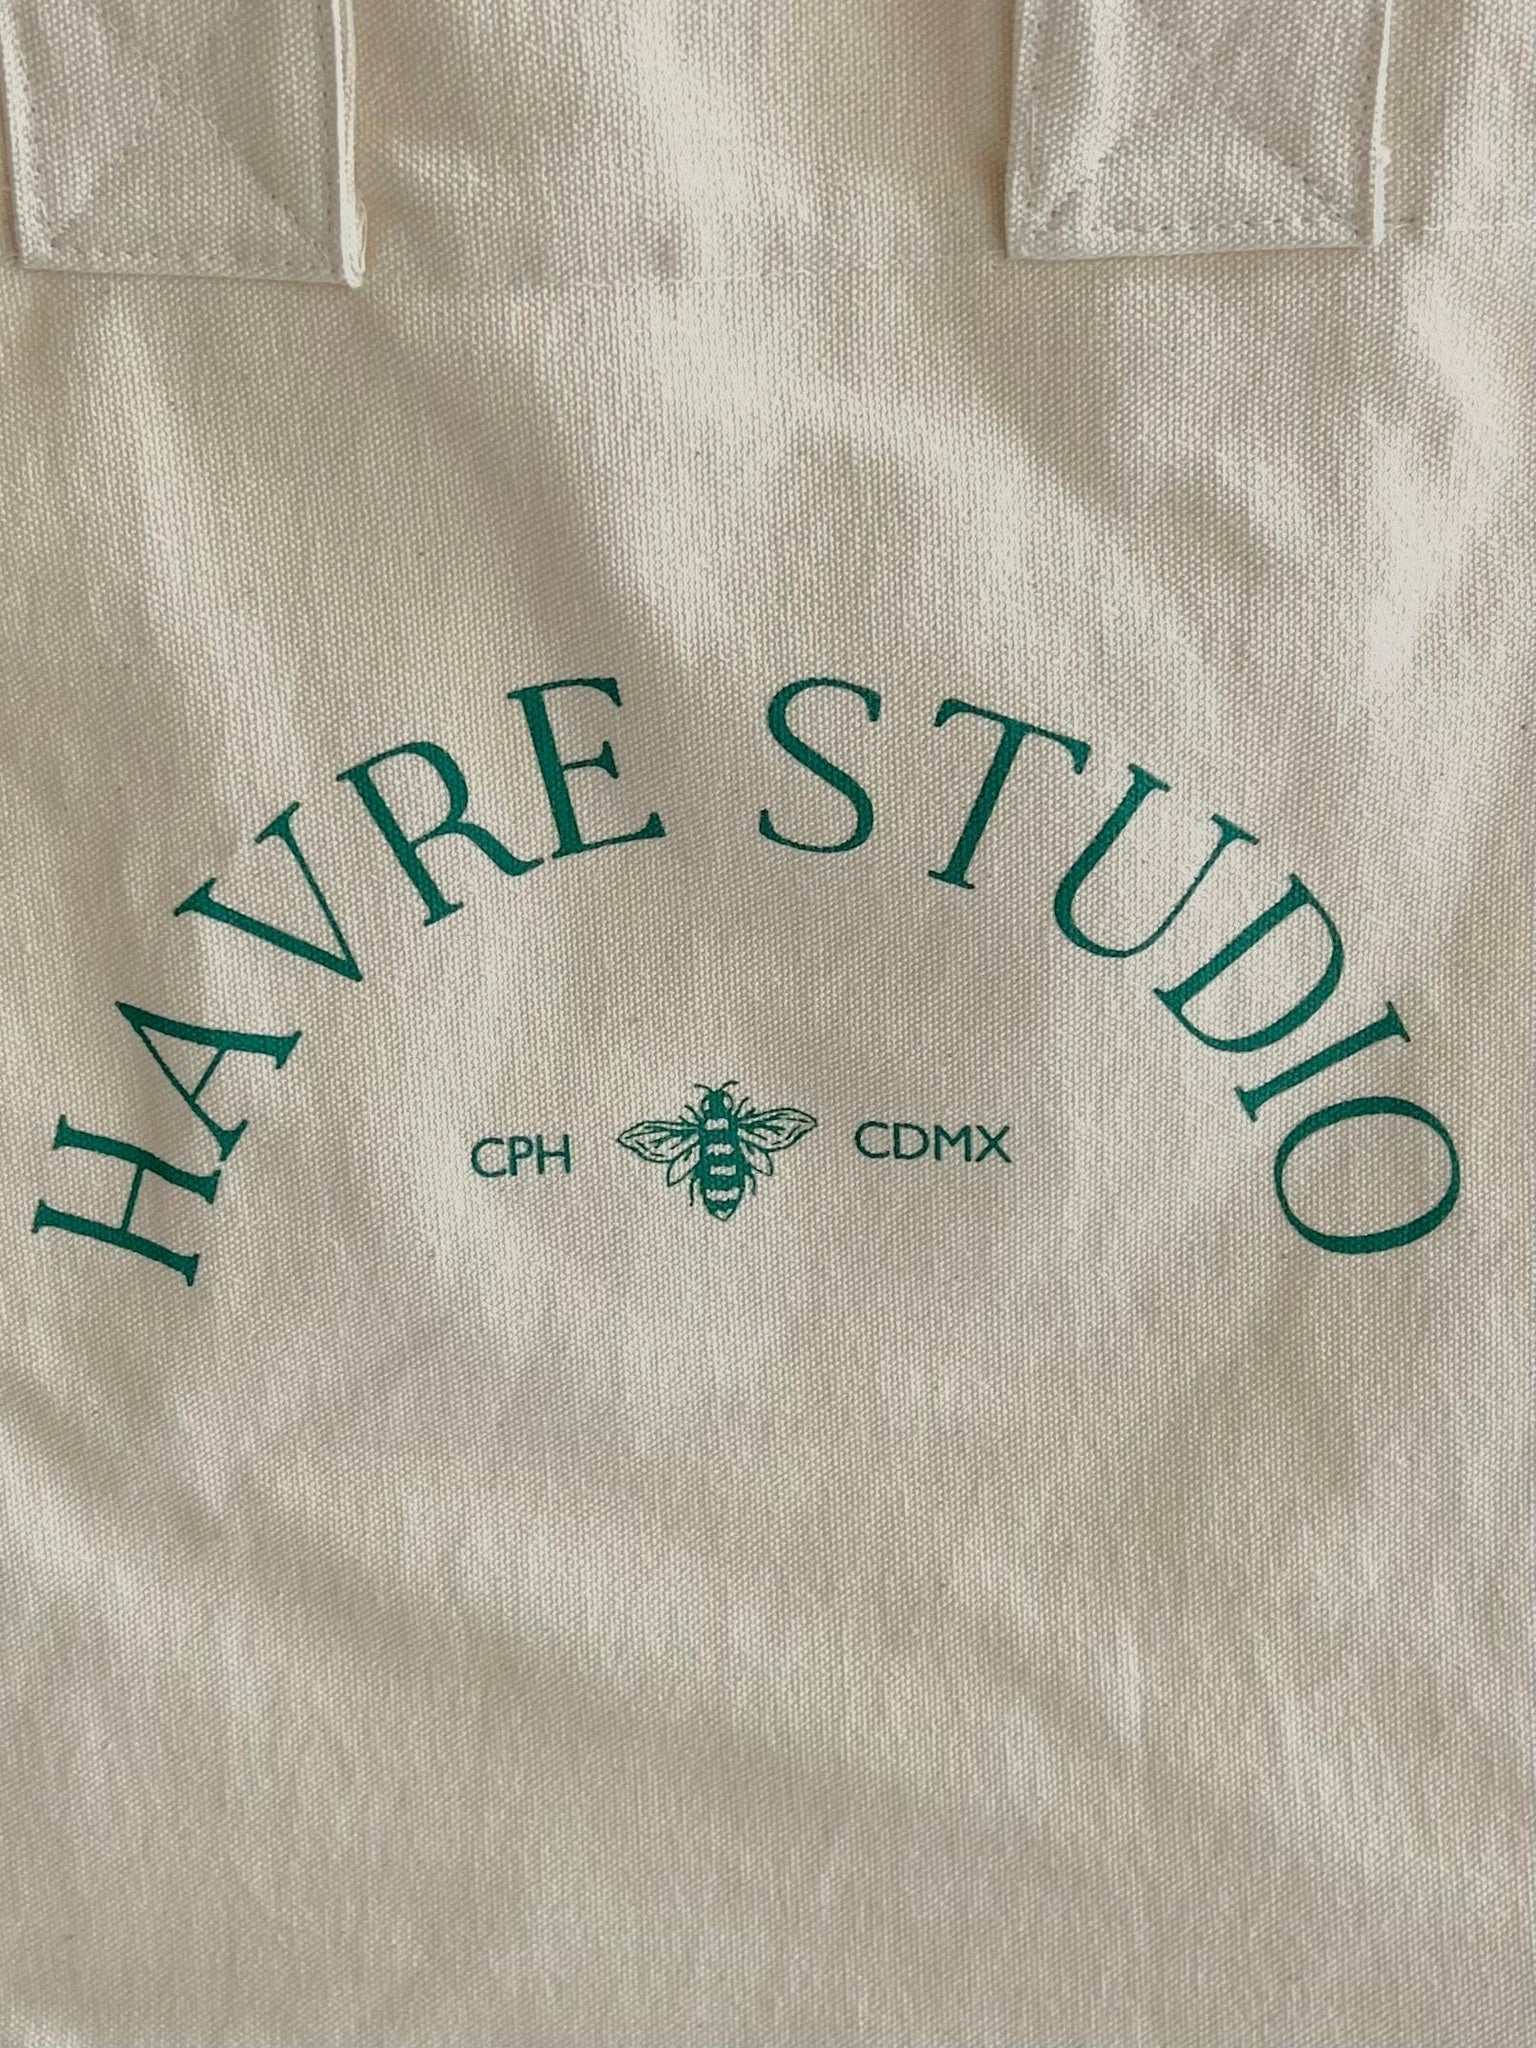 Havre Studio Tote in deep green with inner pocket